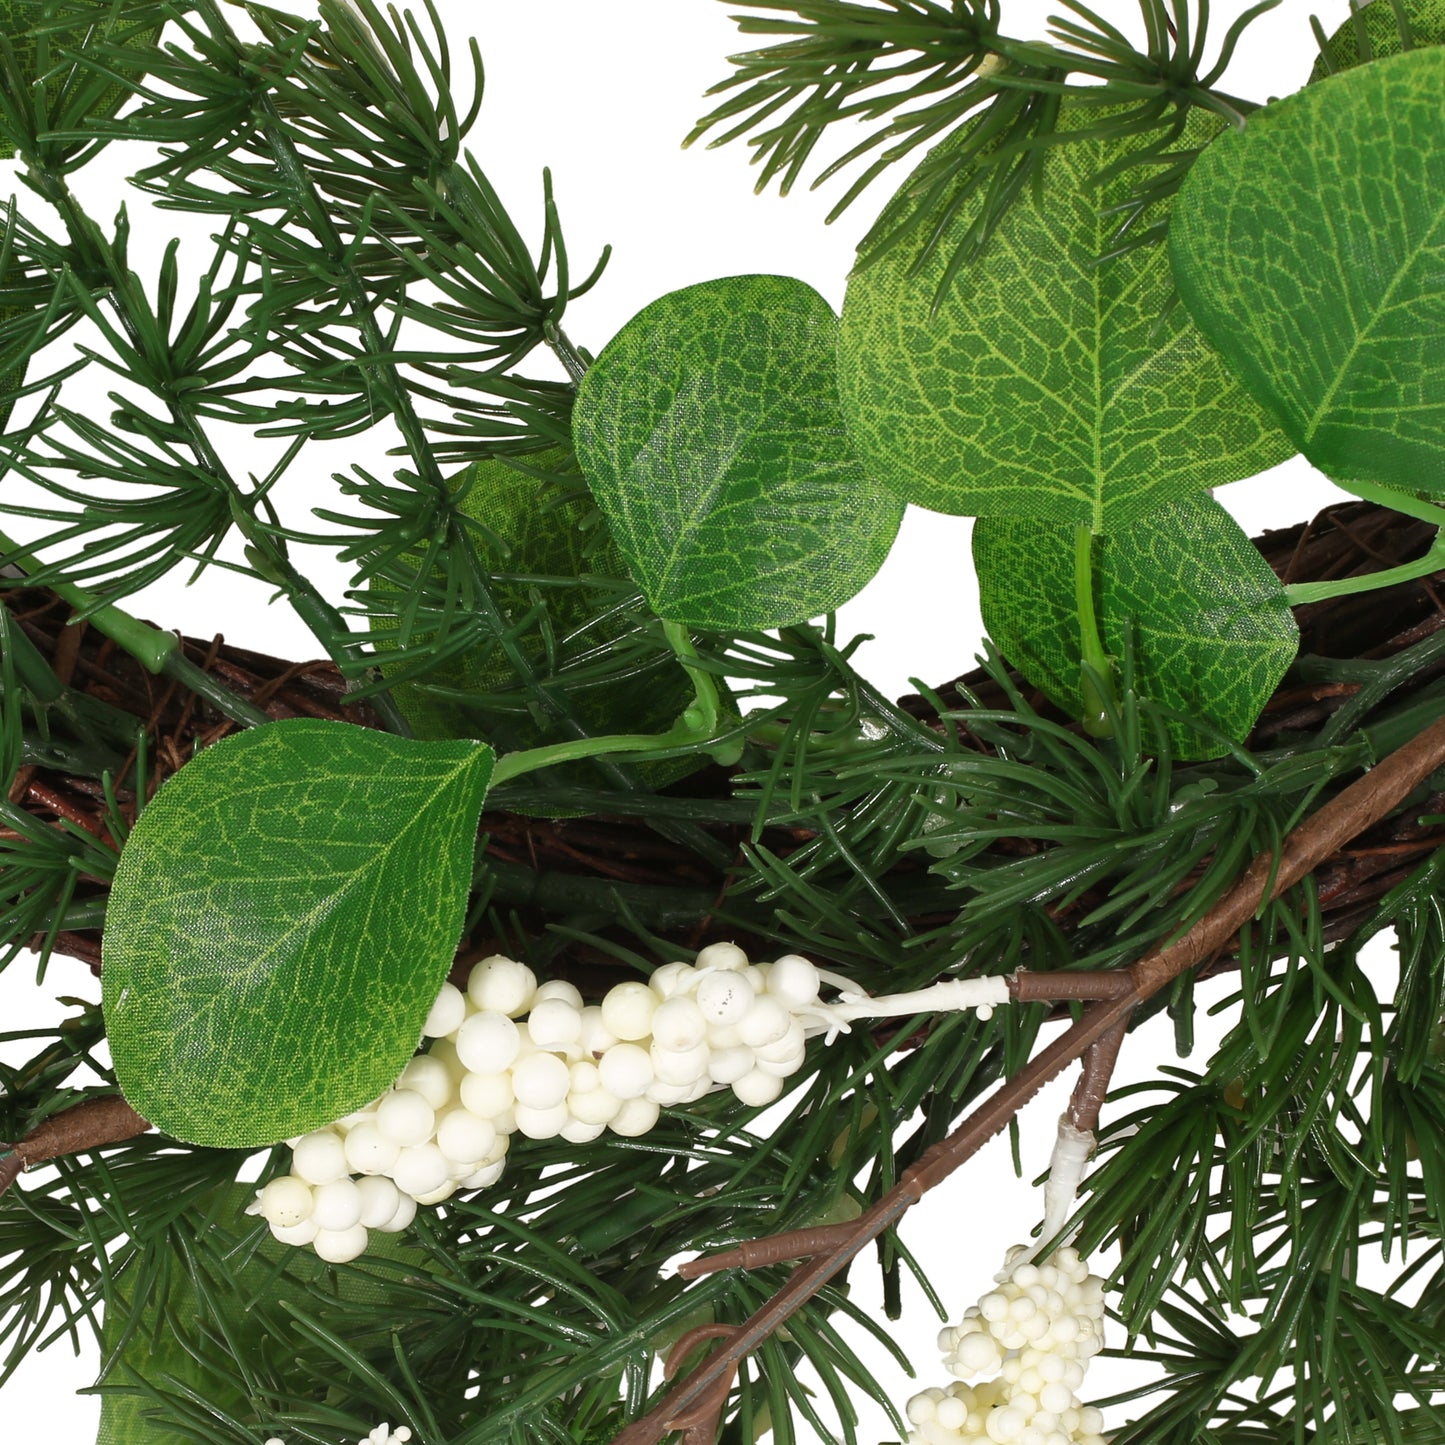 Loveren 25.5" Eucalyptus and Pine Artificial Wreath with Berries